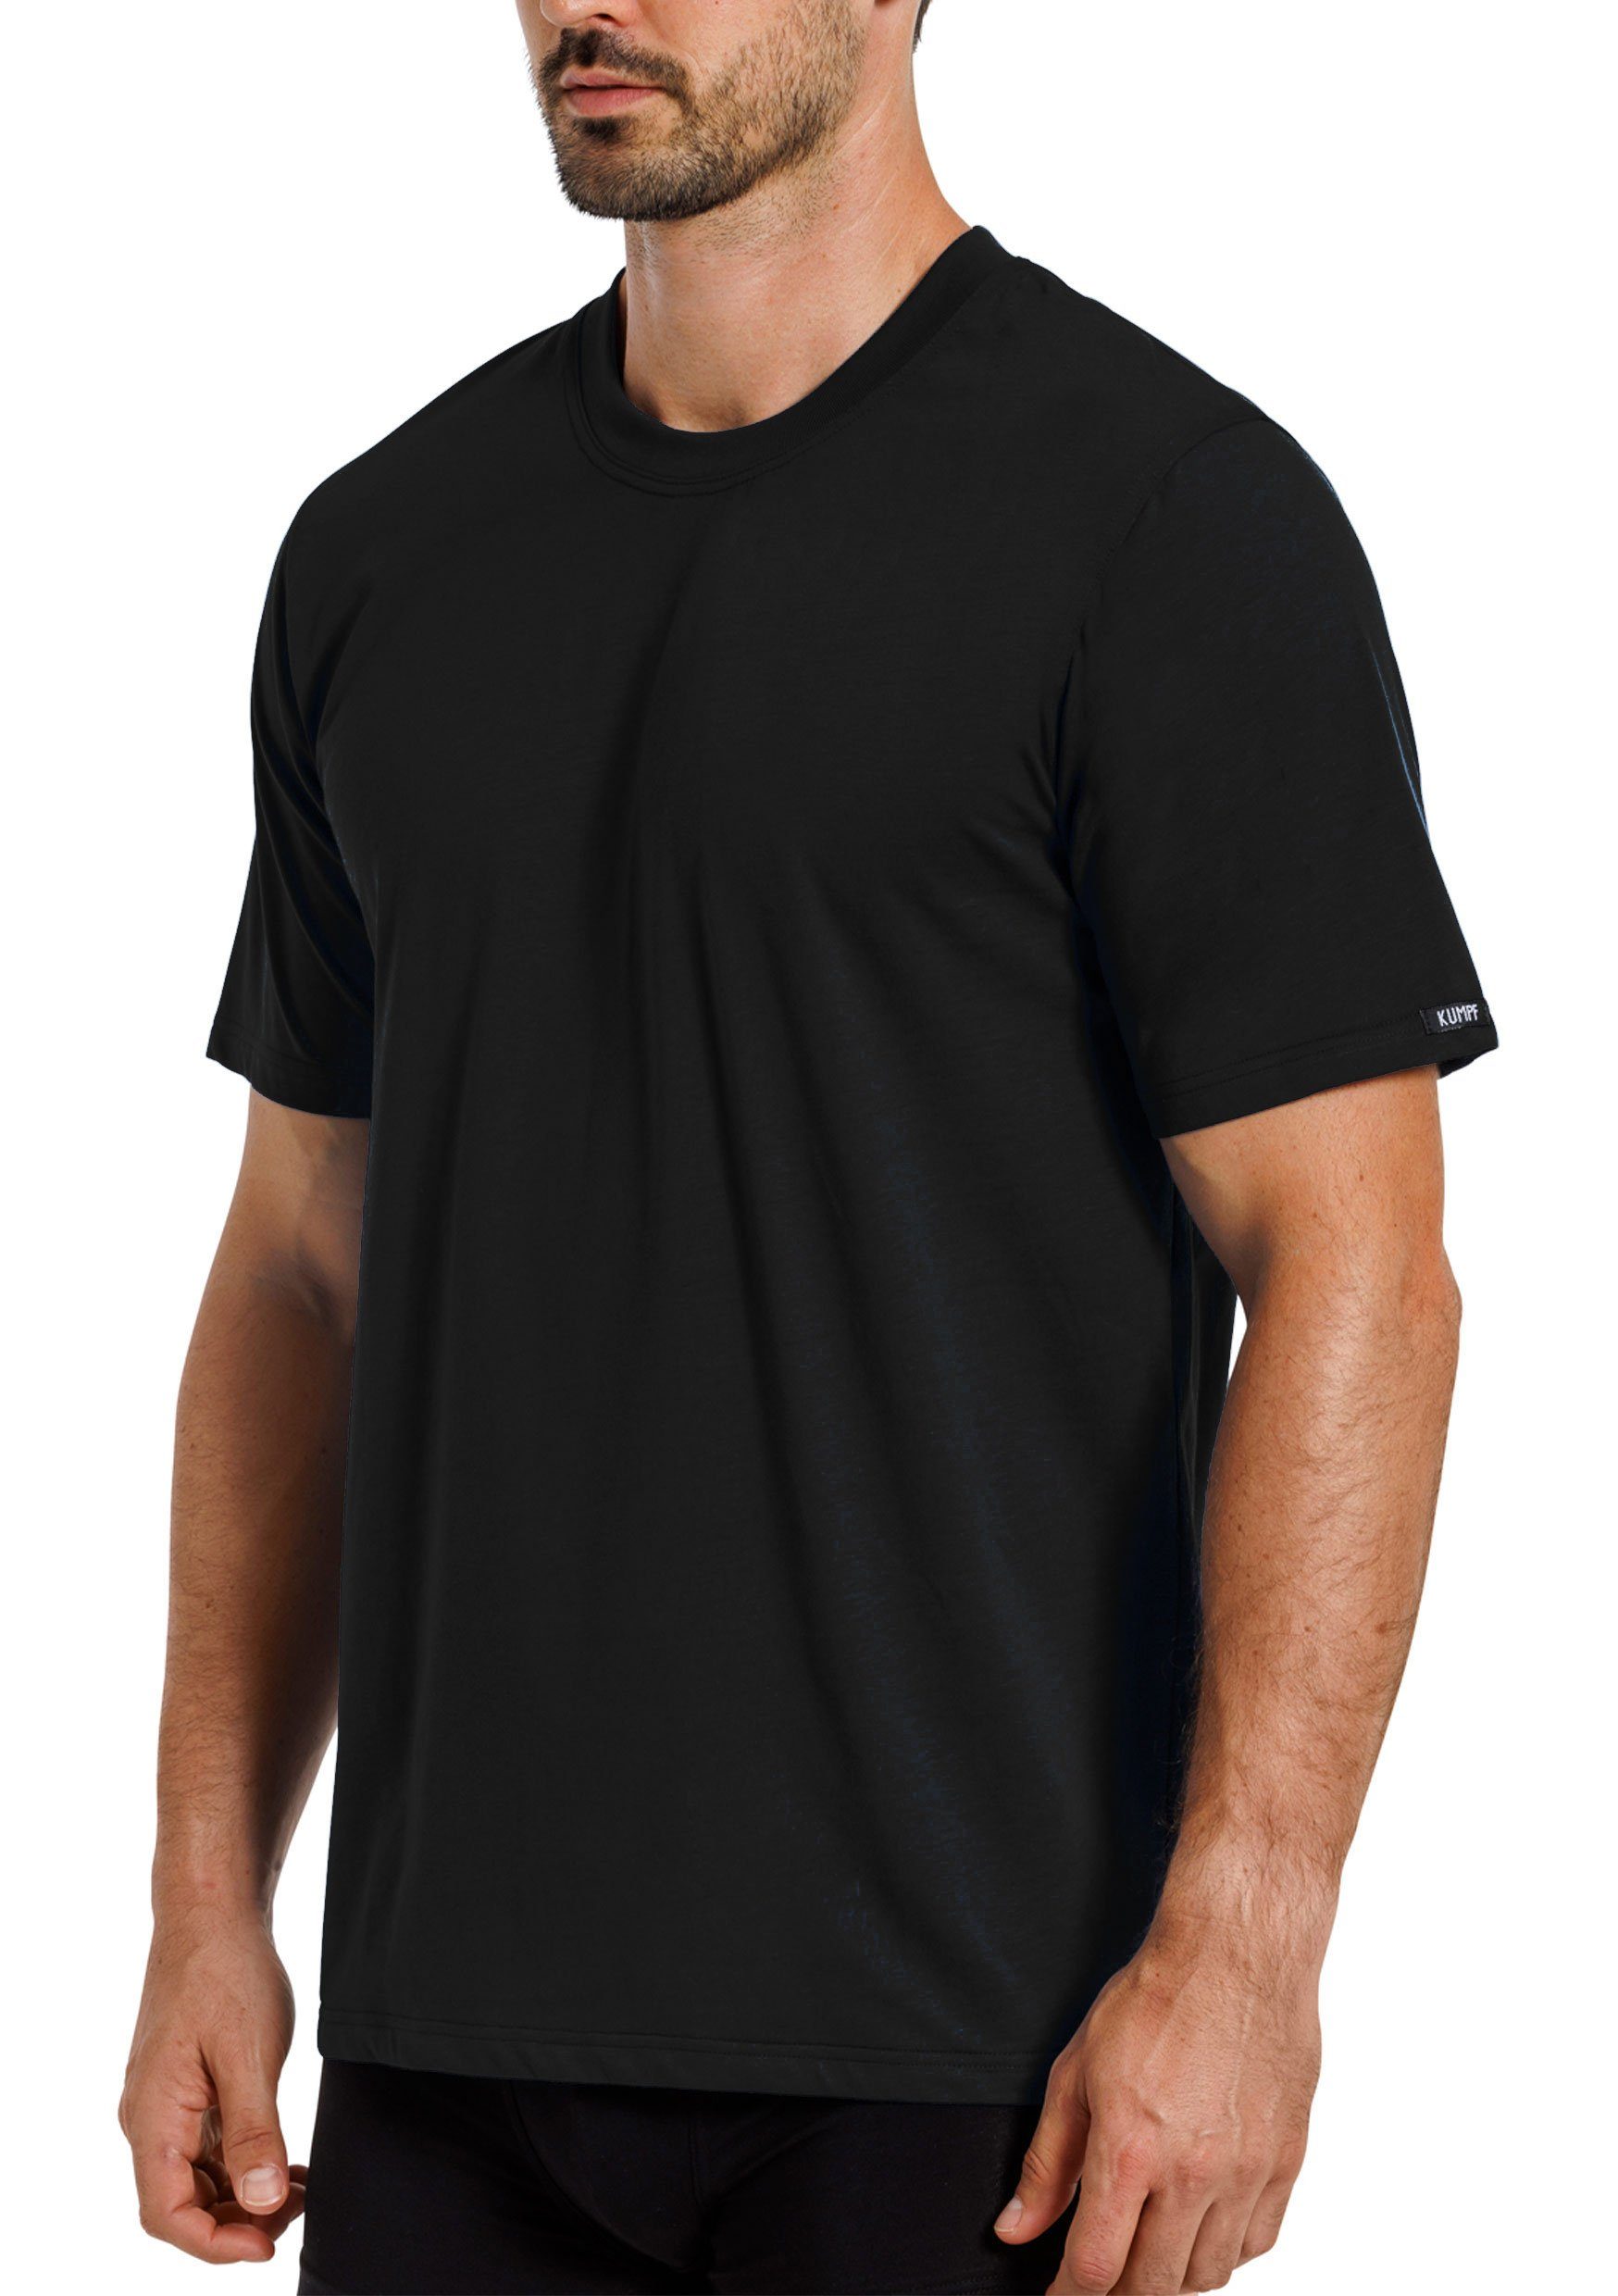 Bio 2er weiss Unterziehshirt Markenqualität schwarz T-Shirt Sparpack (Spar-Set, KUMPF hohe 2-St) Herren Cotton